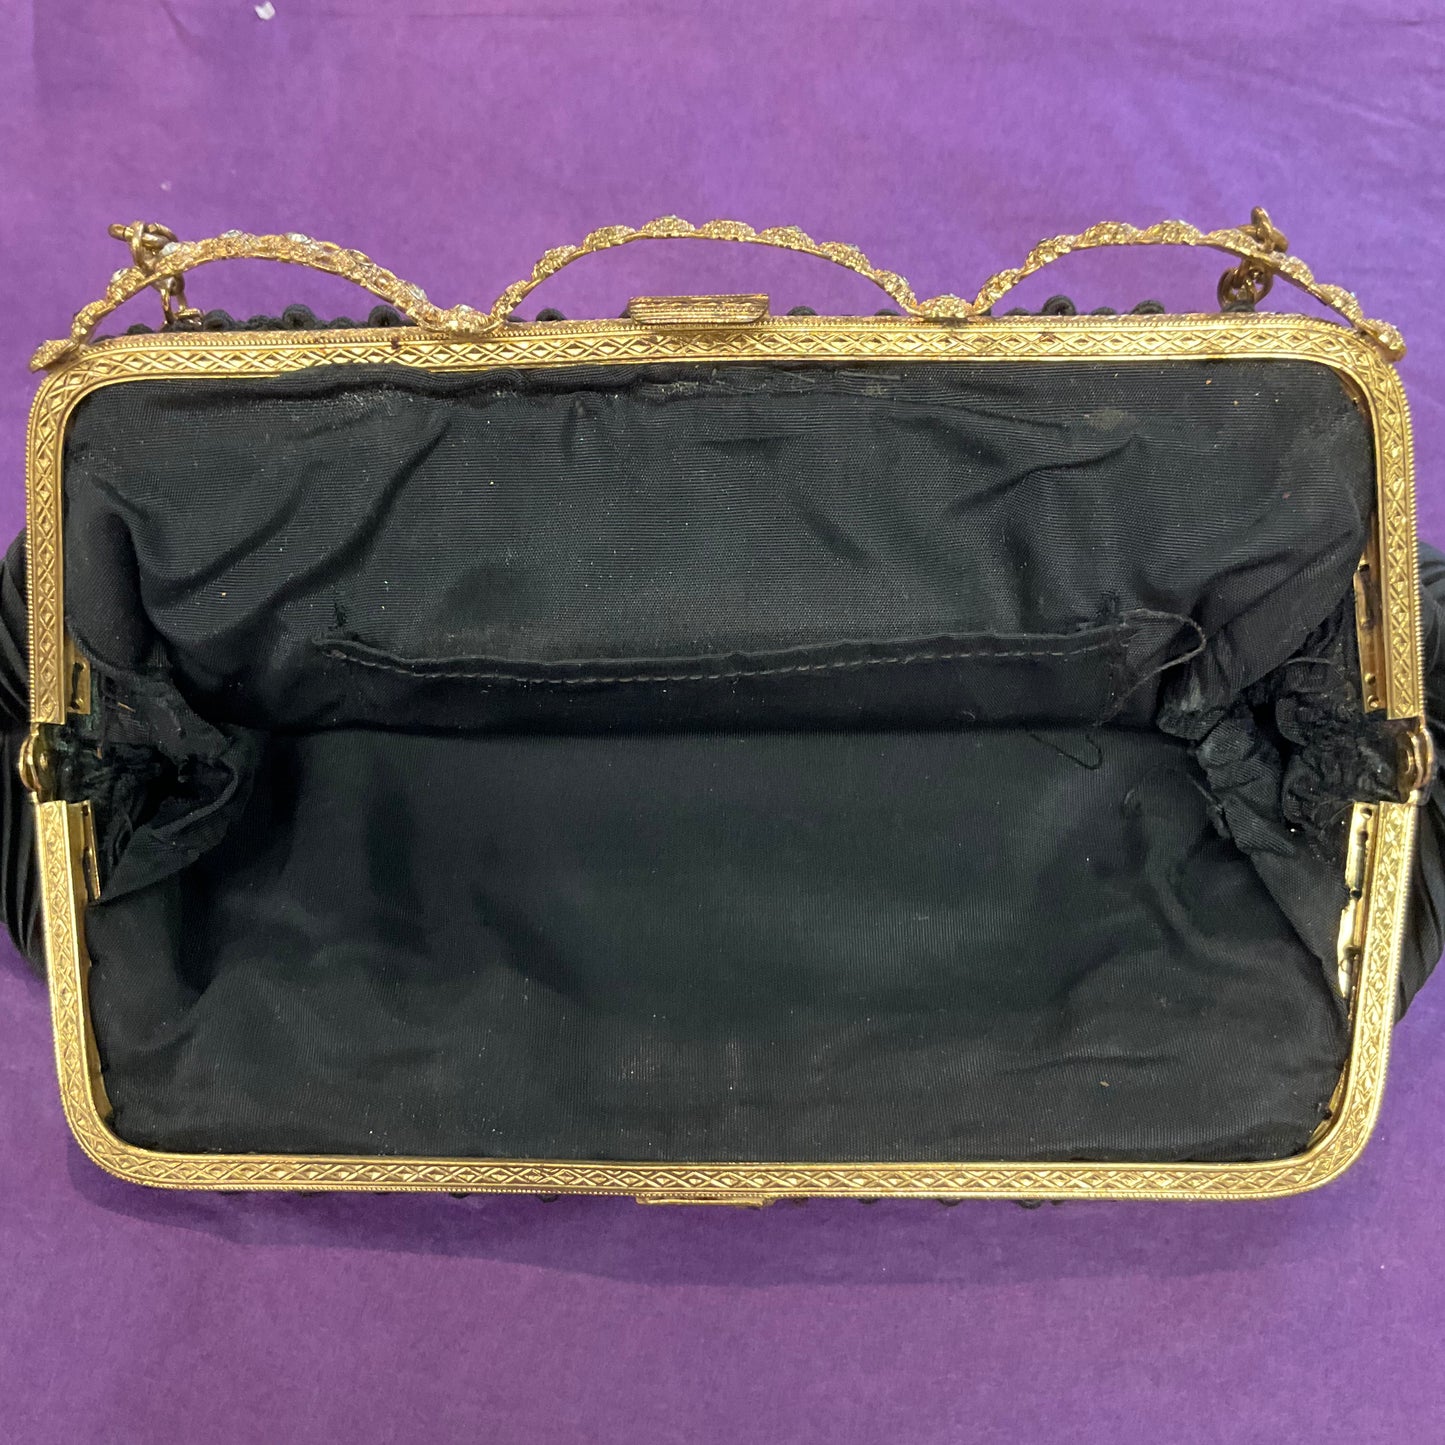 Antique Art Deco Black silk evening bag with ornate rhinestone studded frame